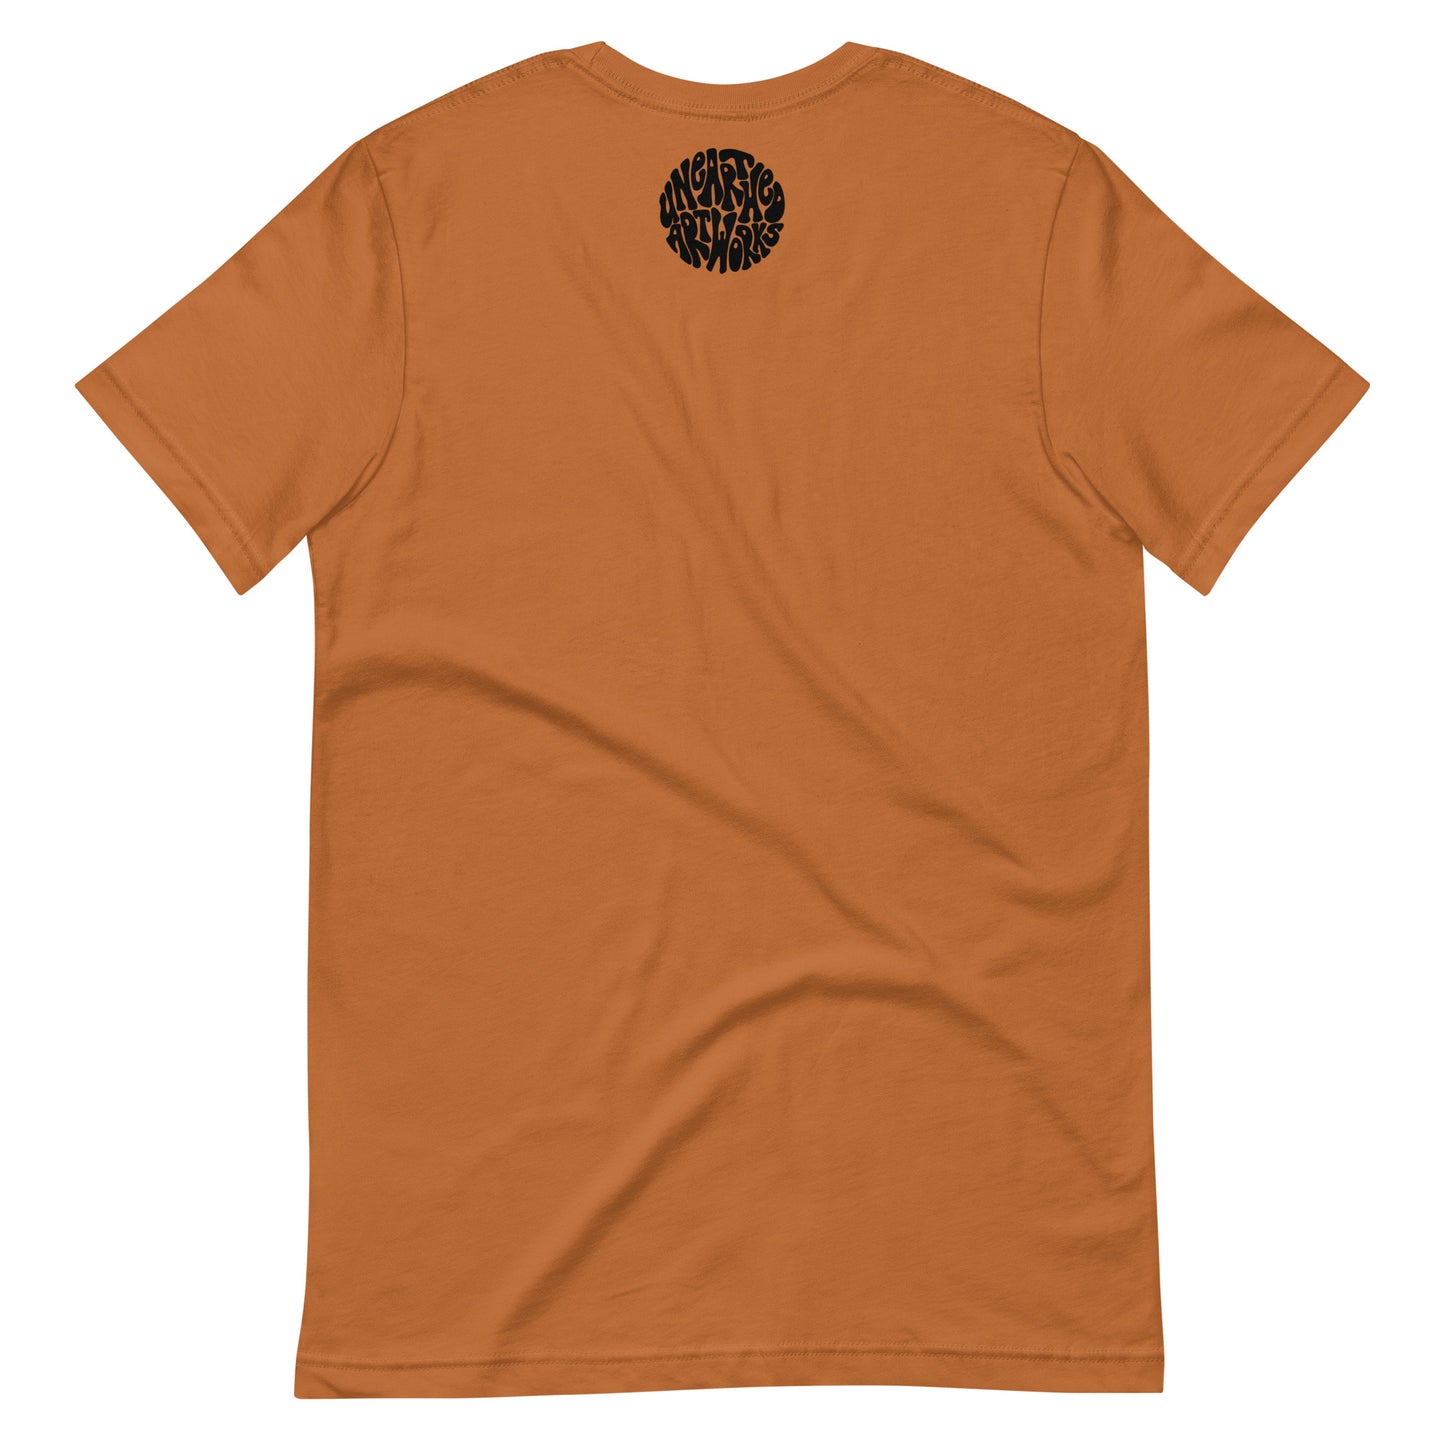 grow wild t-shirt (design on front)